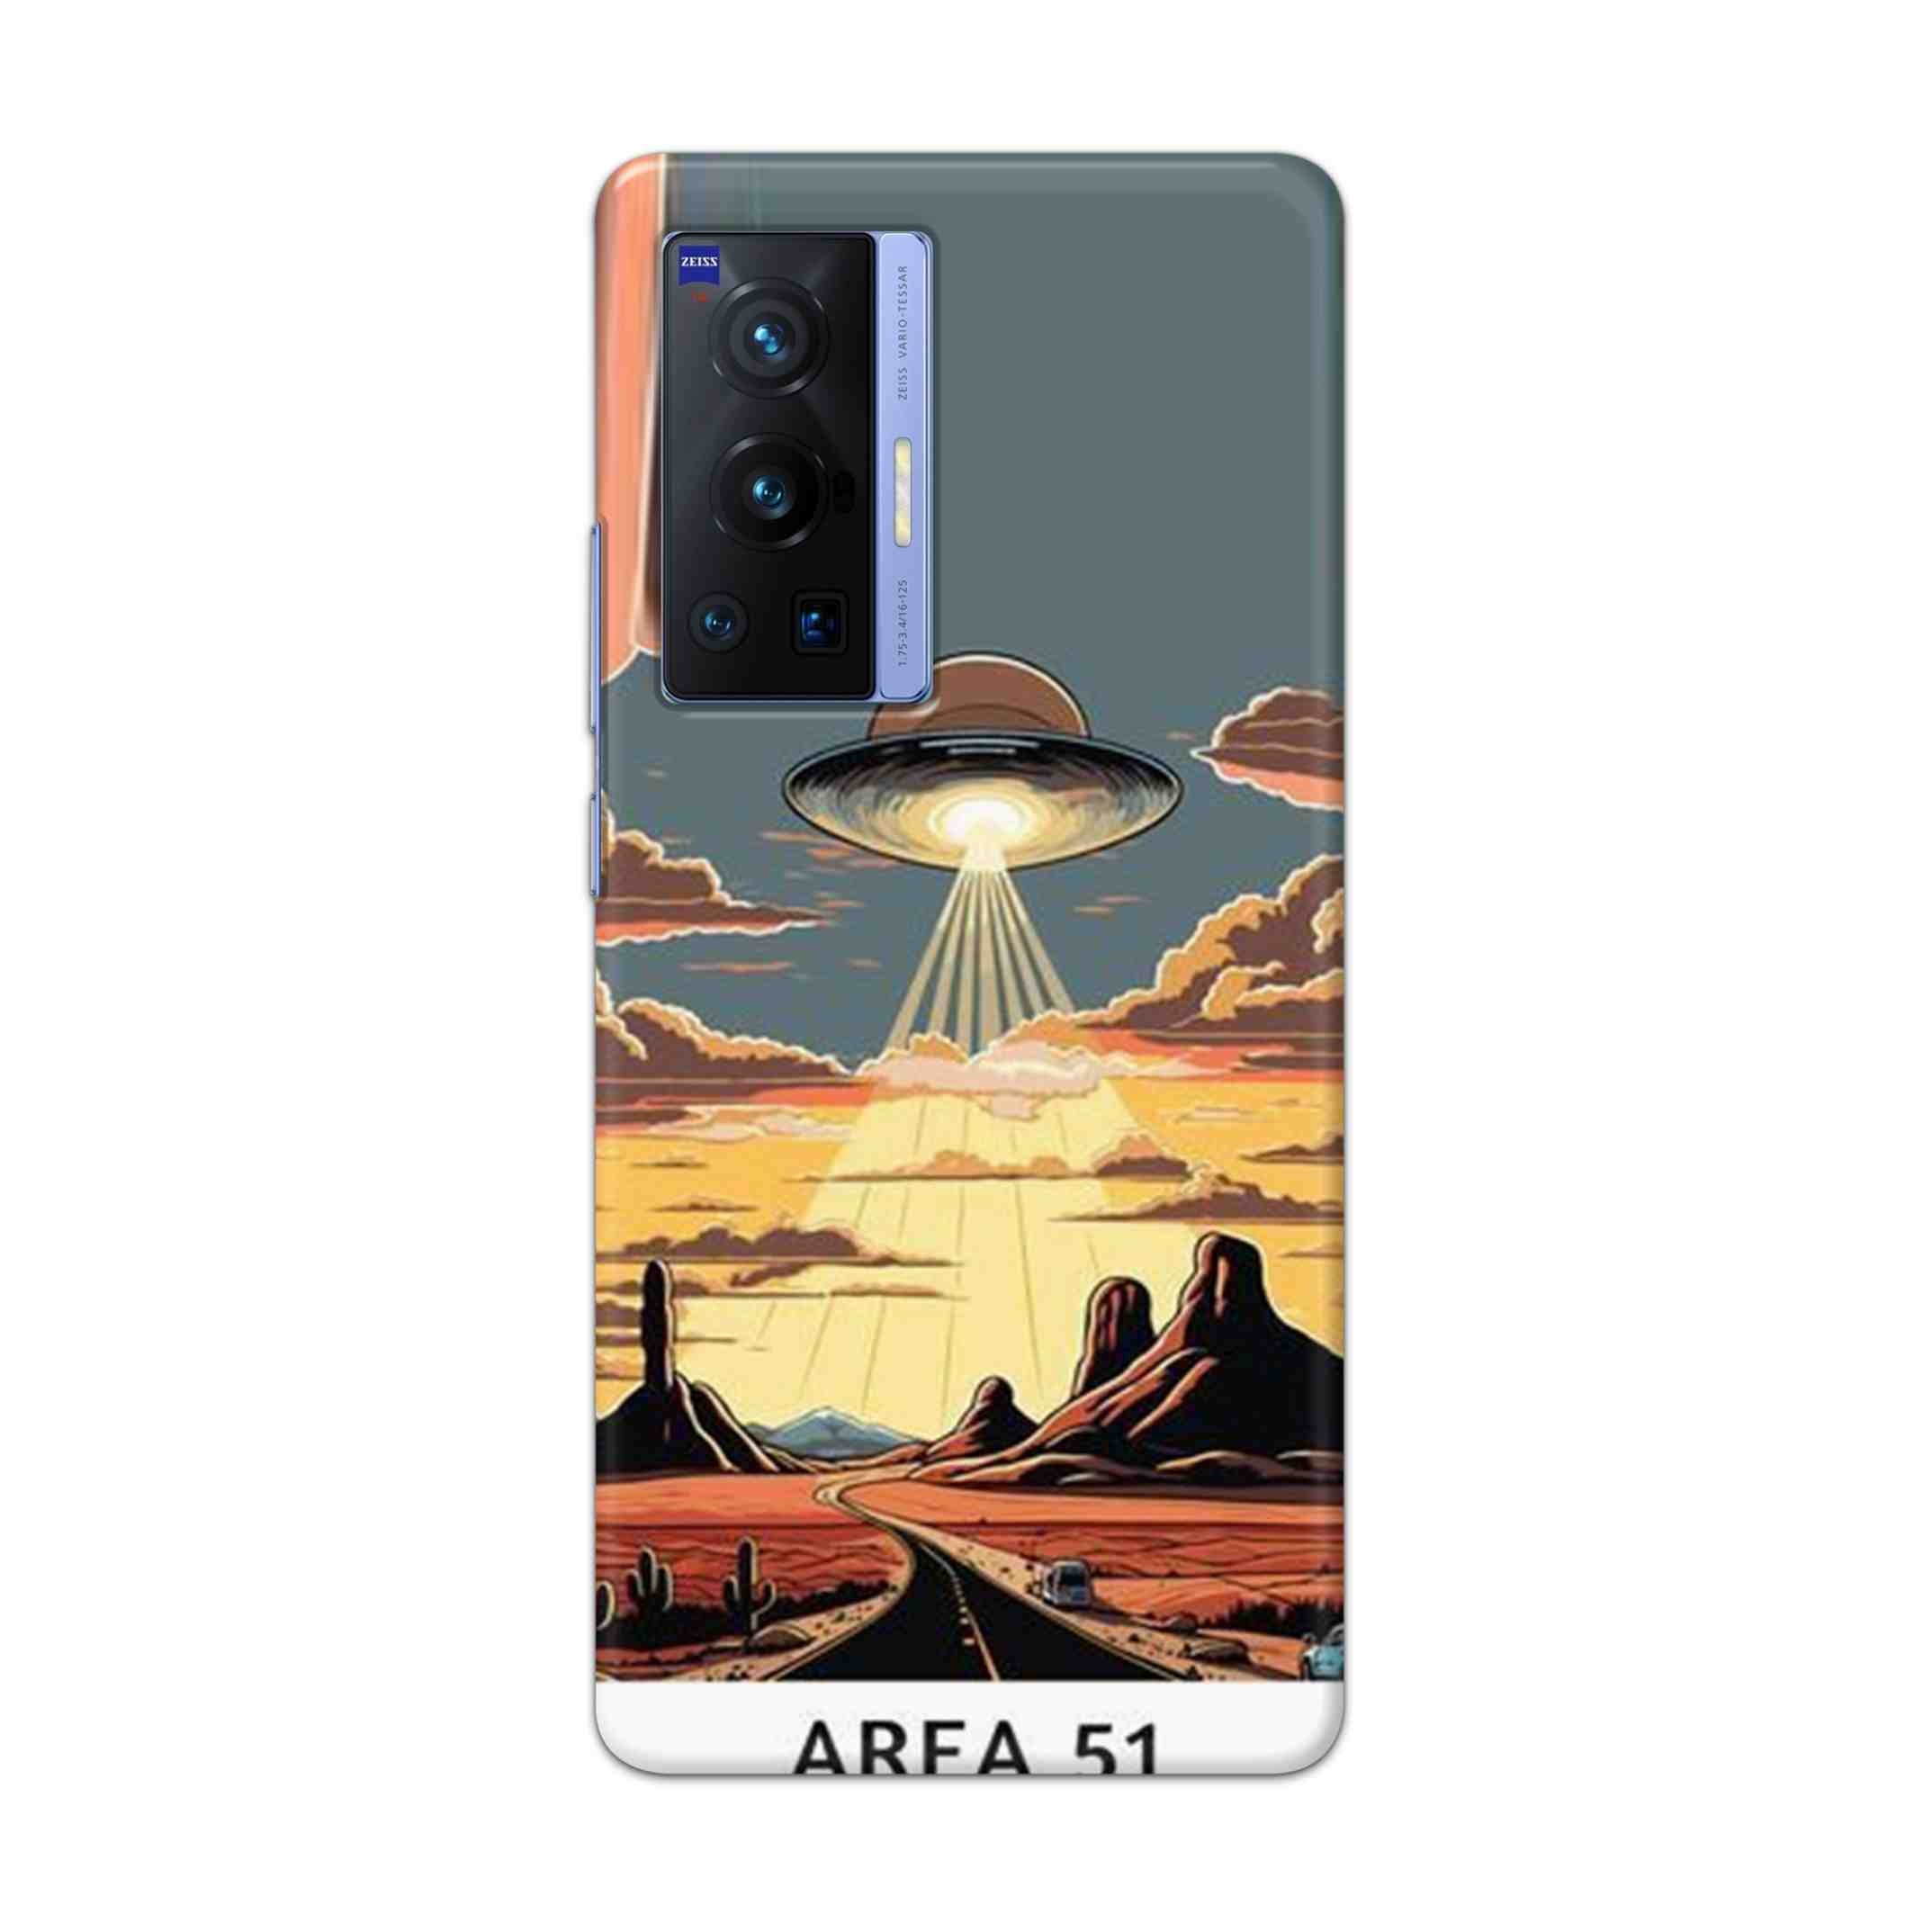 Buy Area 51 Hard Back Mobile Phone Case Cover For Vivo X70 Pro Online